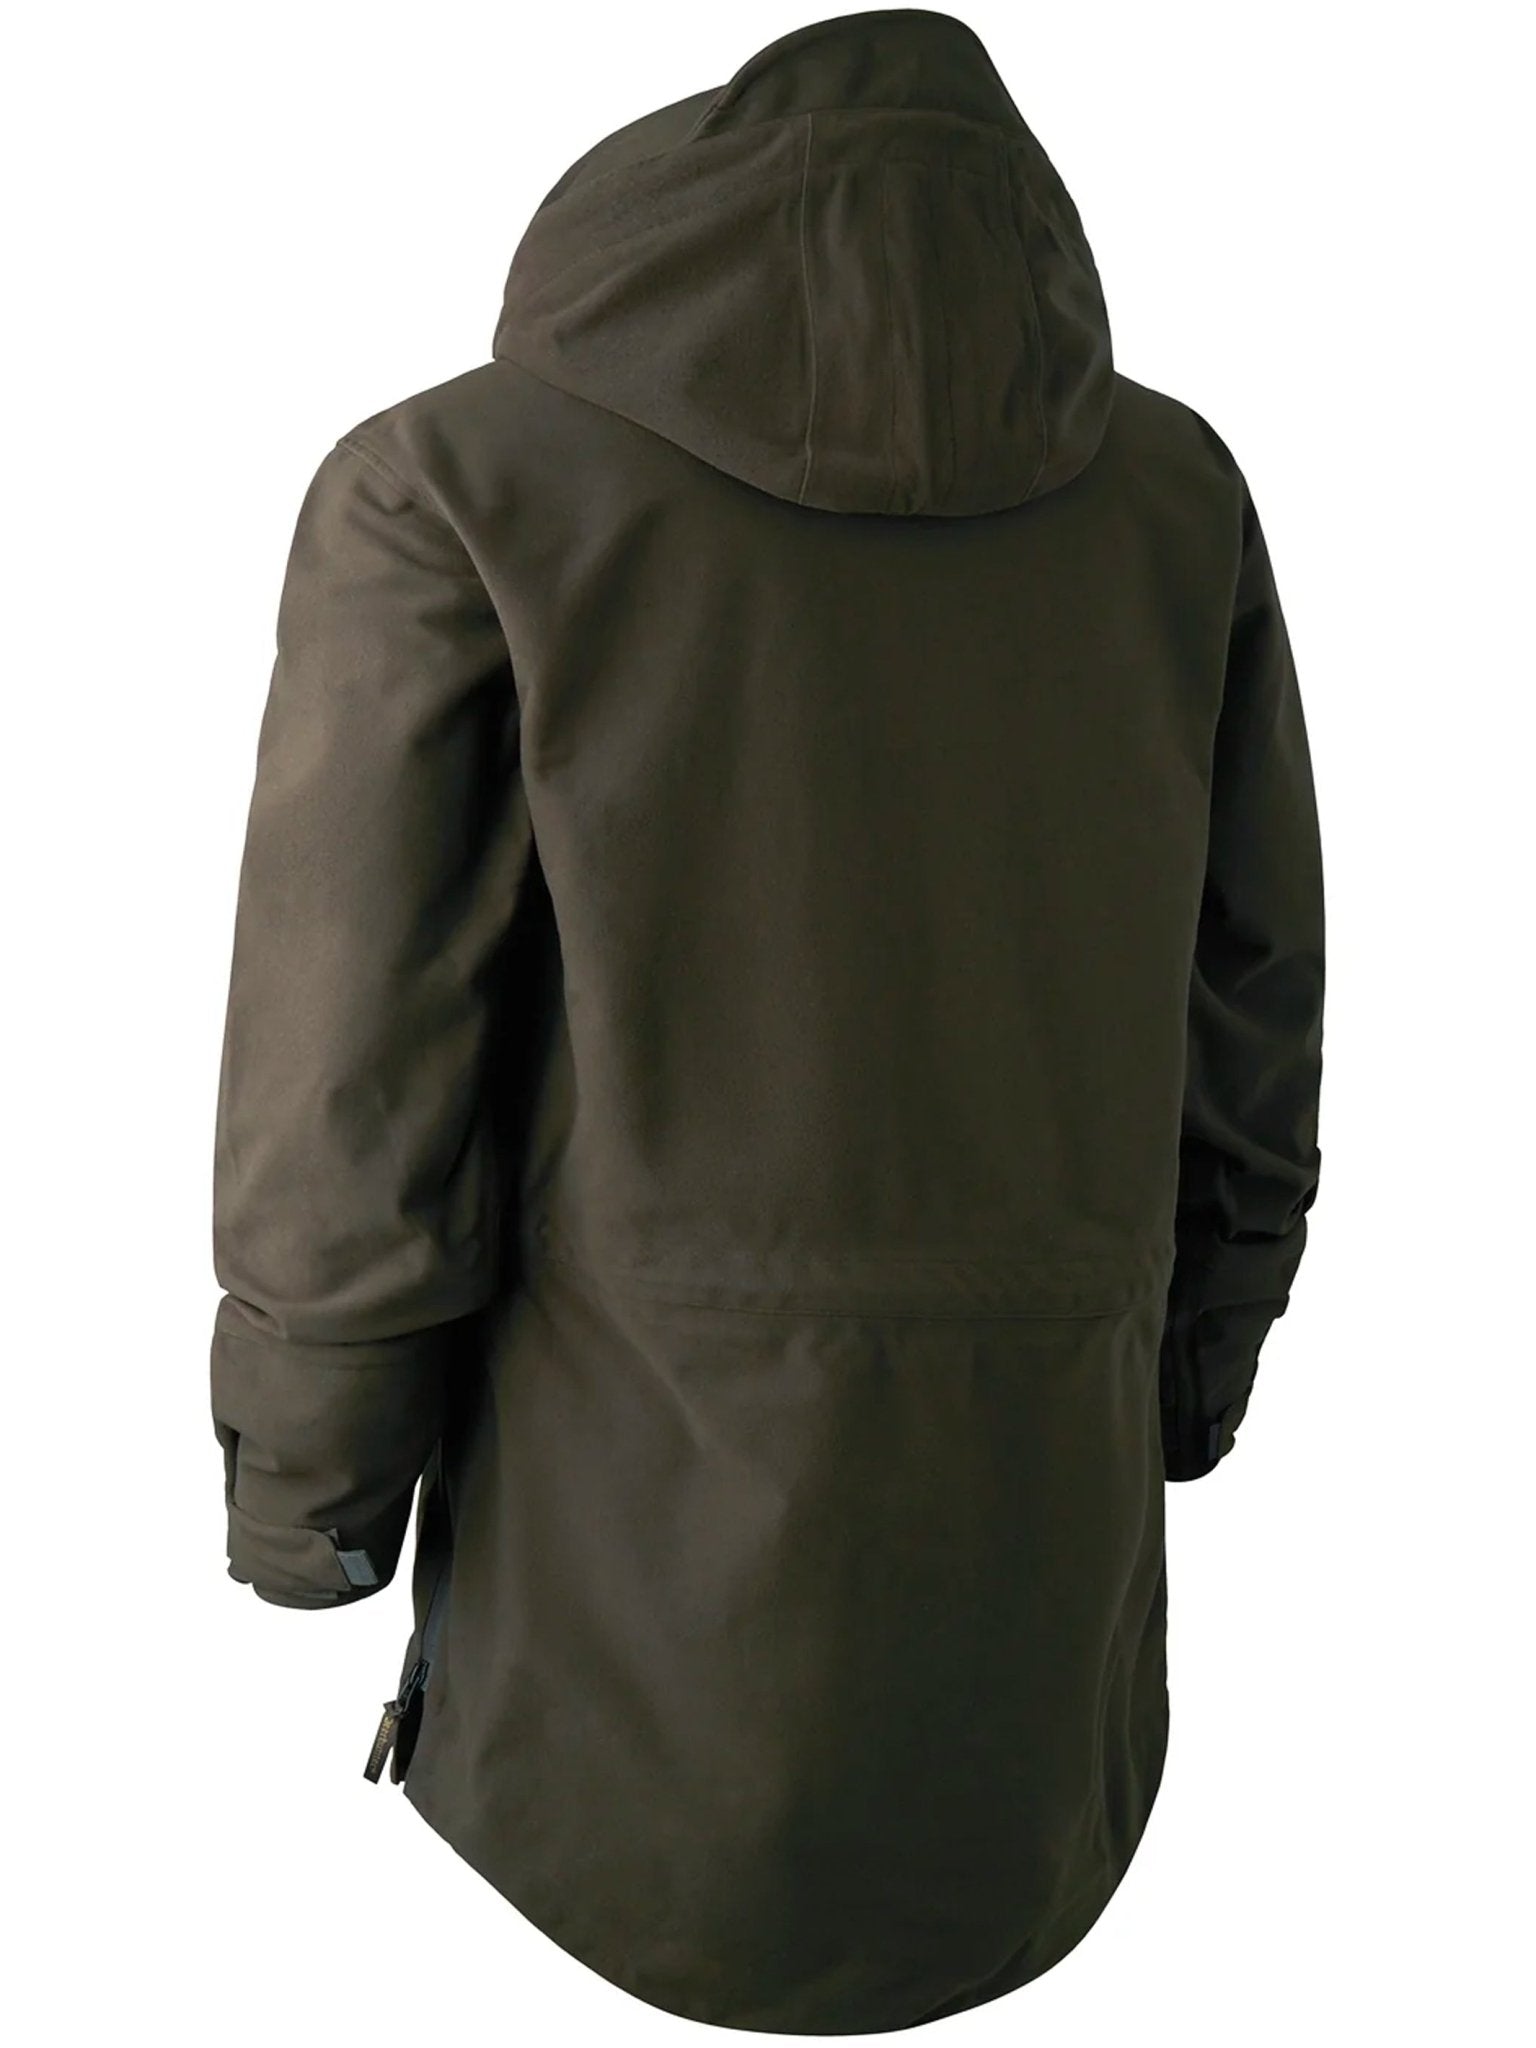 4elementsclothingDeerhunterDeerhunter - Pro Gamekeeper Waterproof Smock / coat / jacketOuterwear5726-64-S